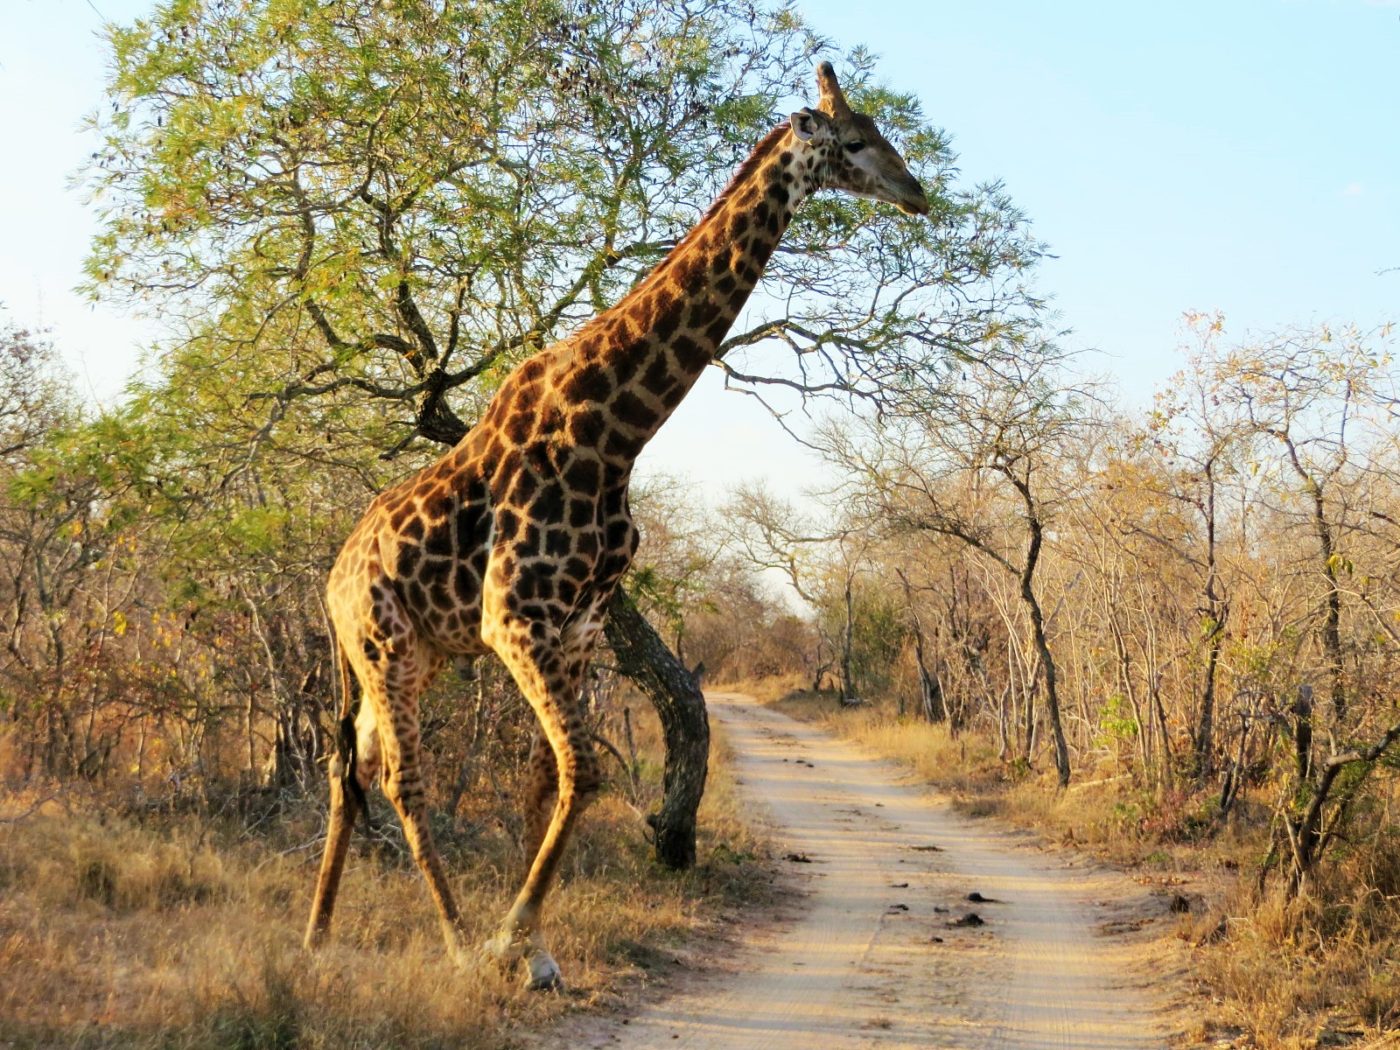 A giraffe in the Kruger Safari in South Africa